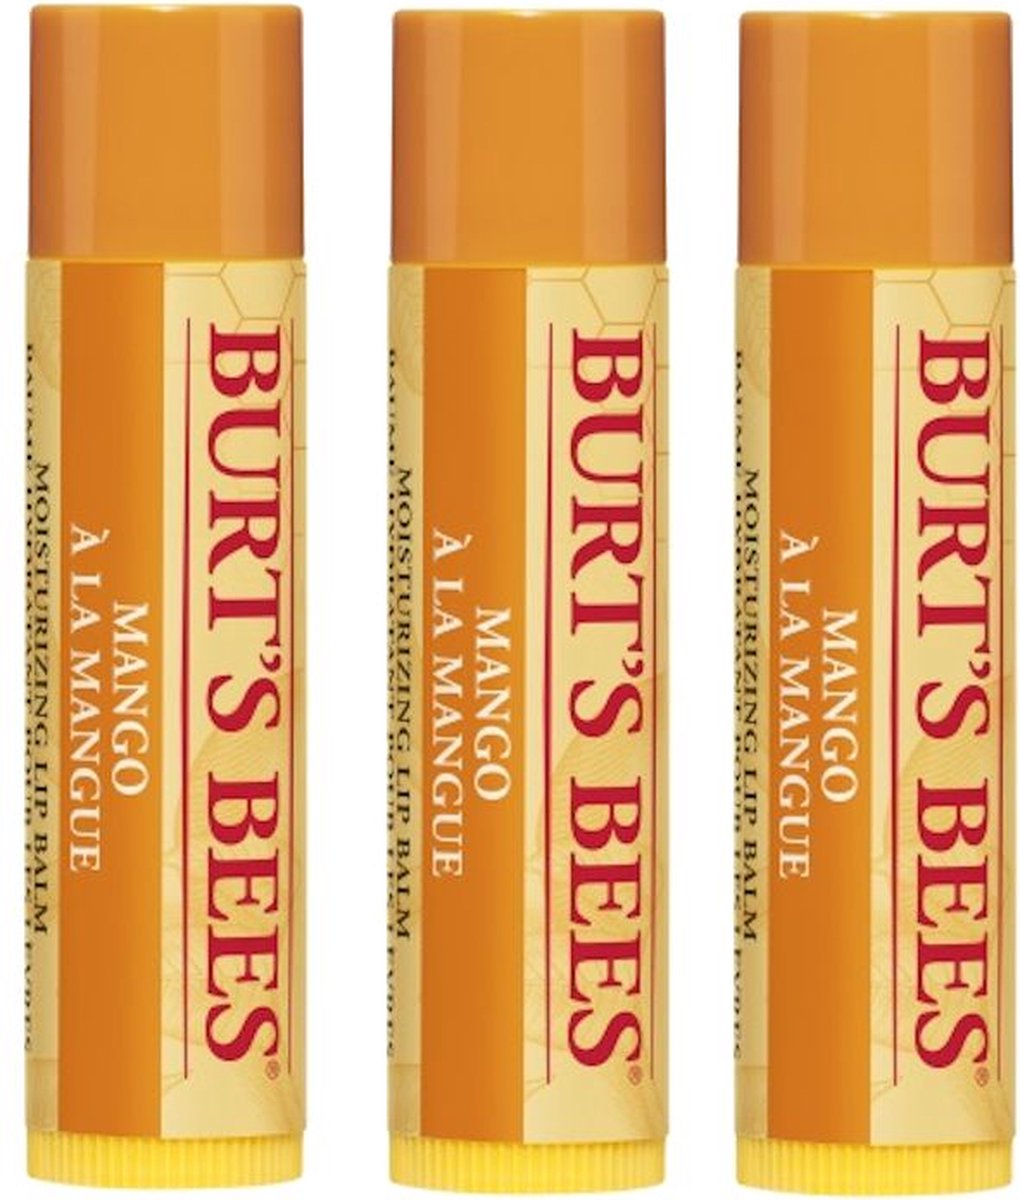 BURT'S BEES - Lip Balm Mango - 3 Pak